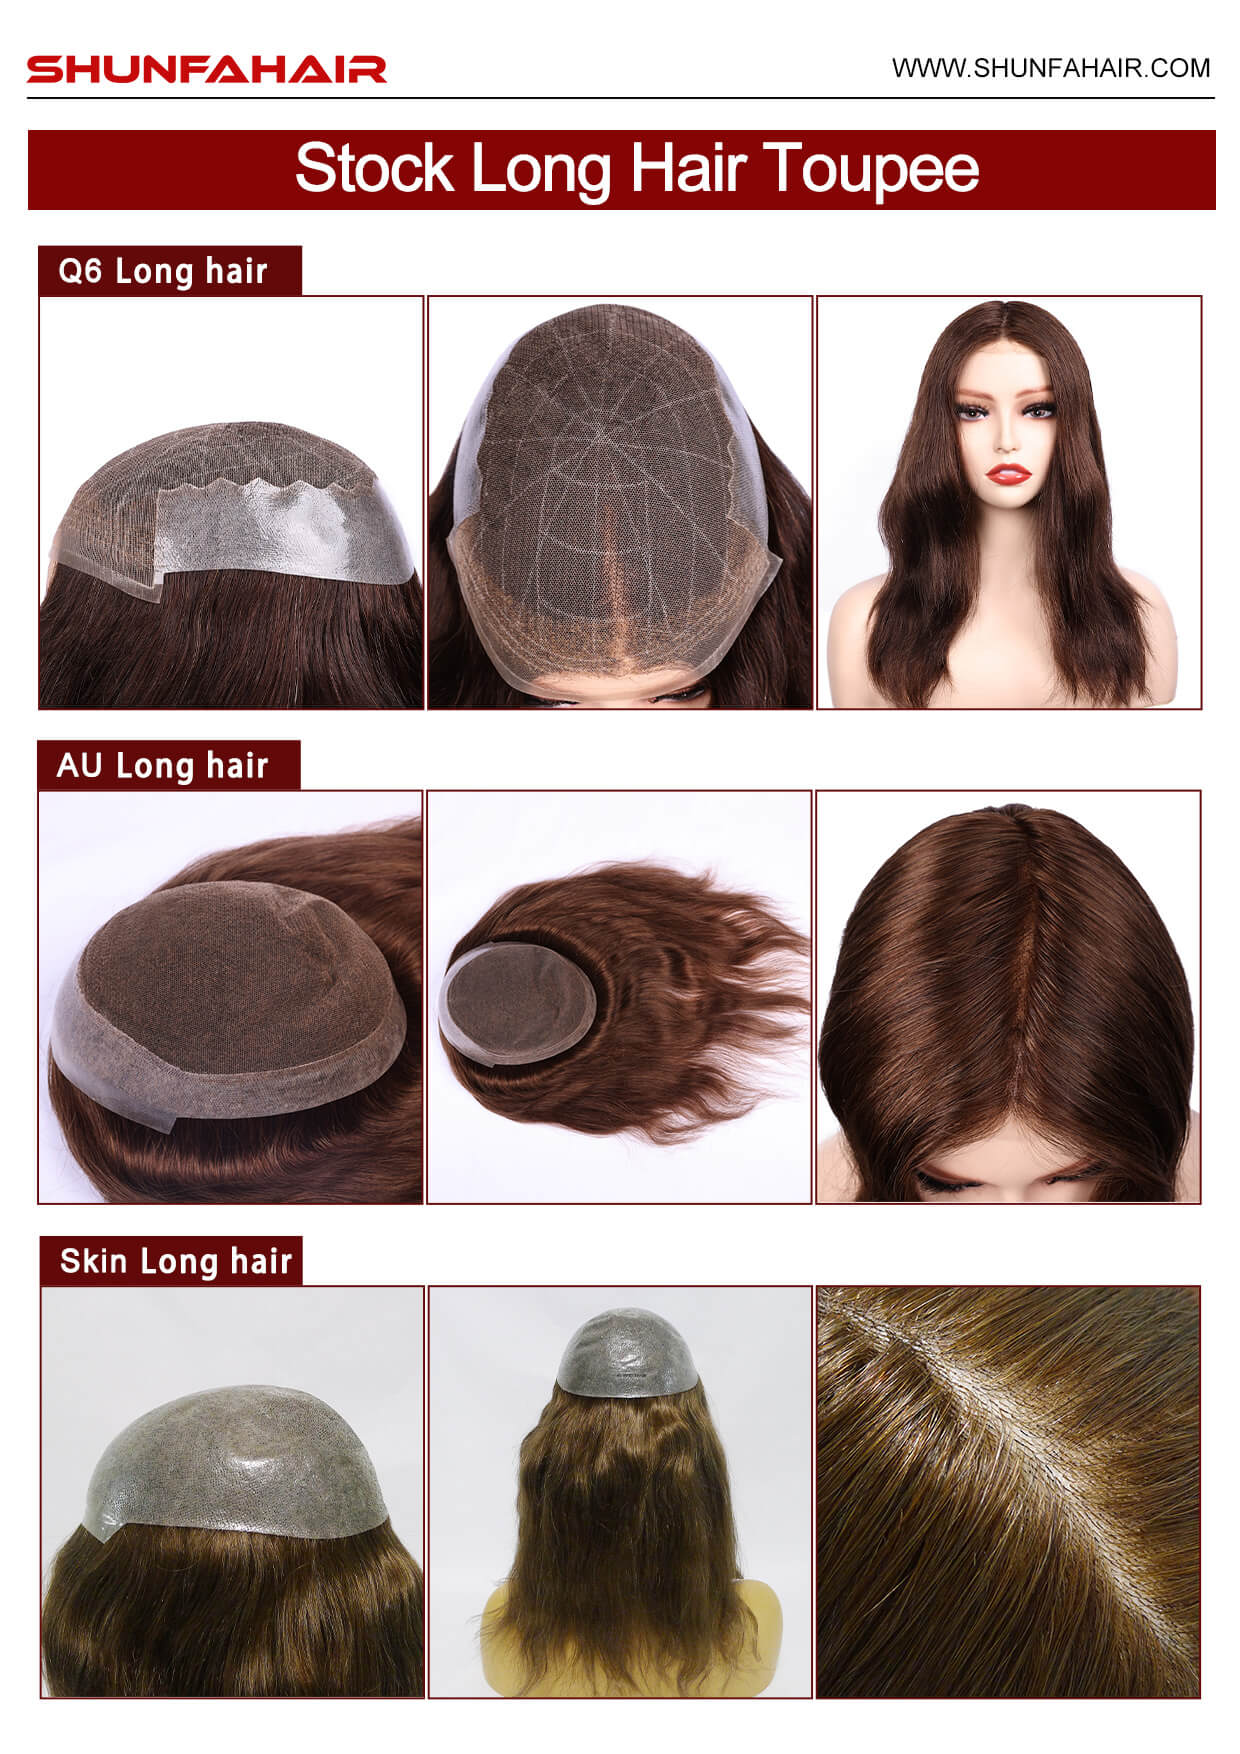 long hair male wigs for men and women.jpg